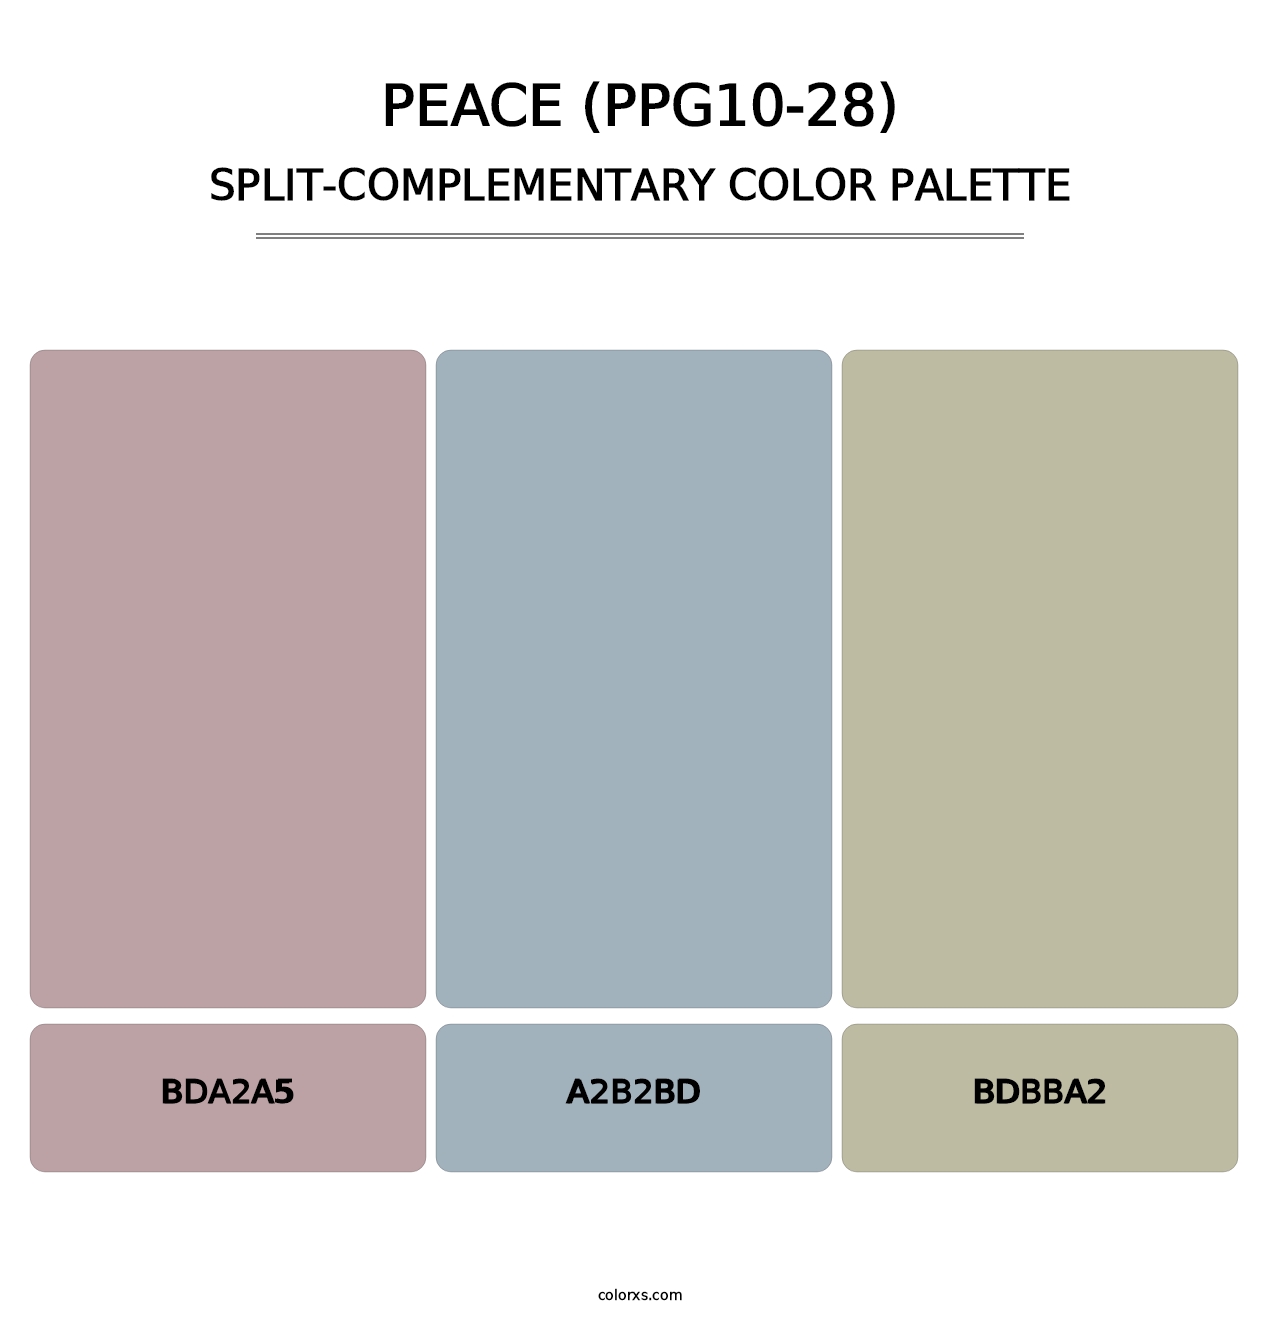 Peace (PPG10-28) - Split-Complementary Color Palette